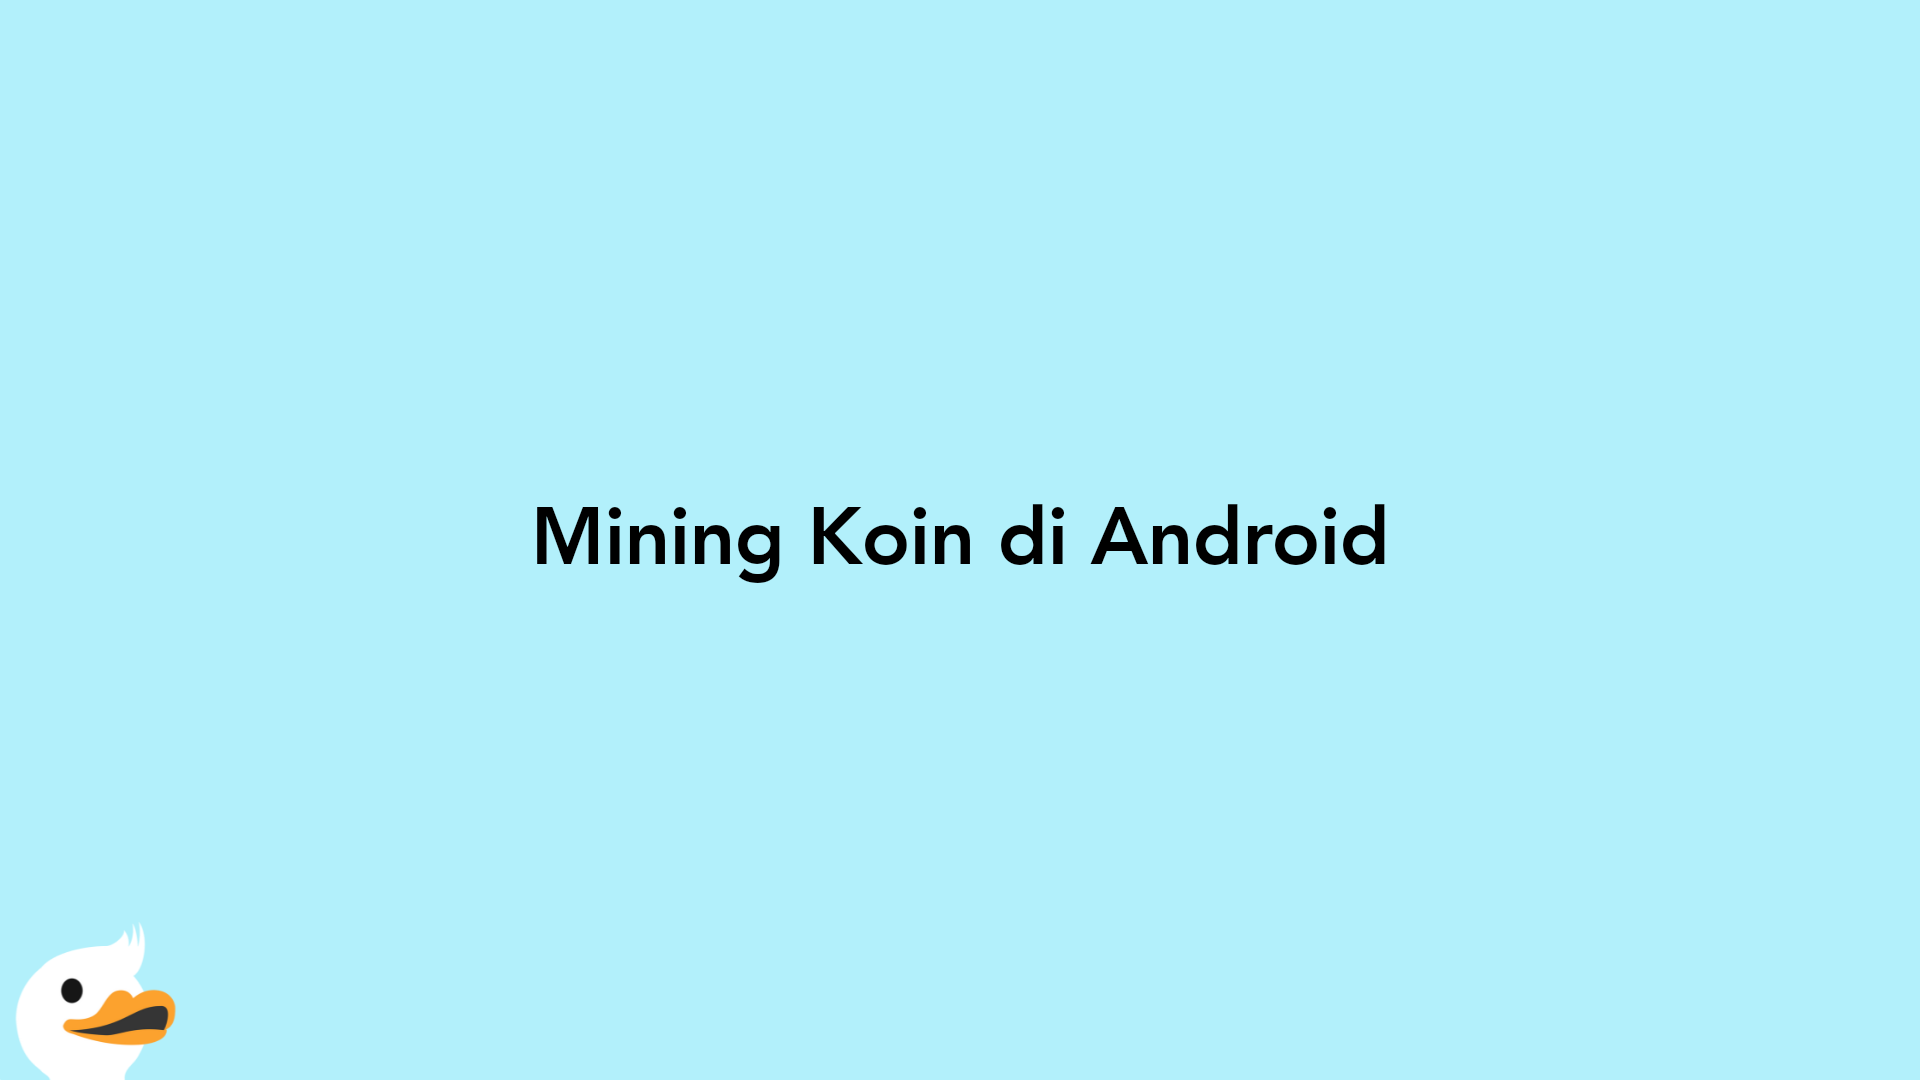 Mining Koin di Android